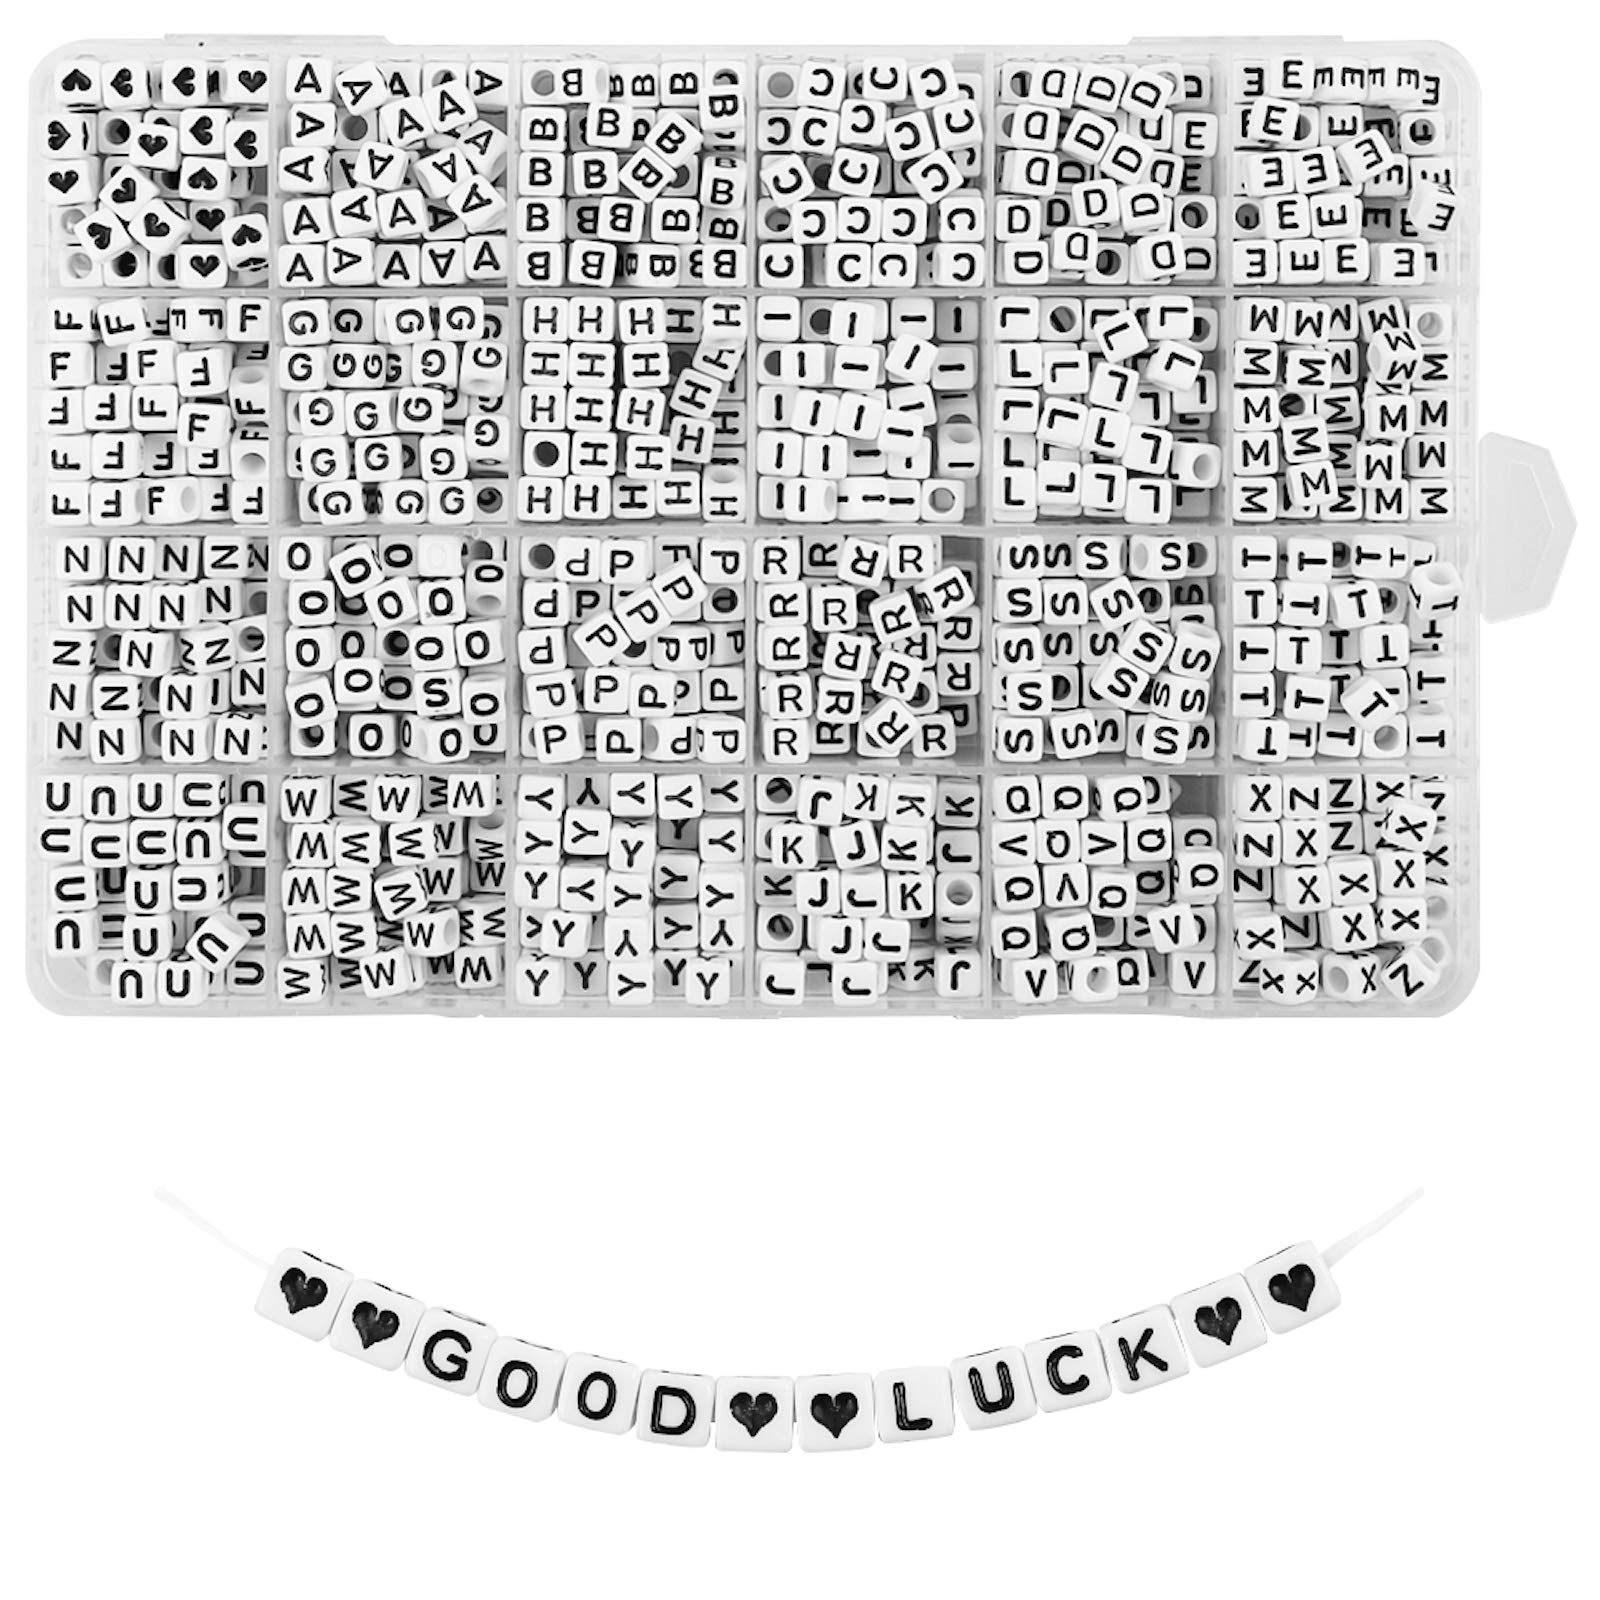 200PCs Mixed Black Alphabet Beads 6x6mm Letter Cube Acrylic Beads